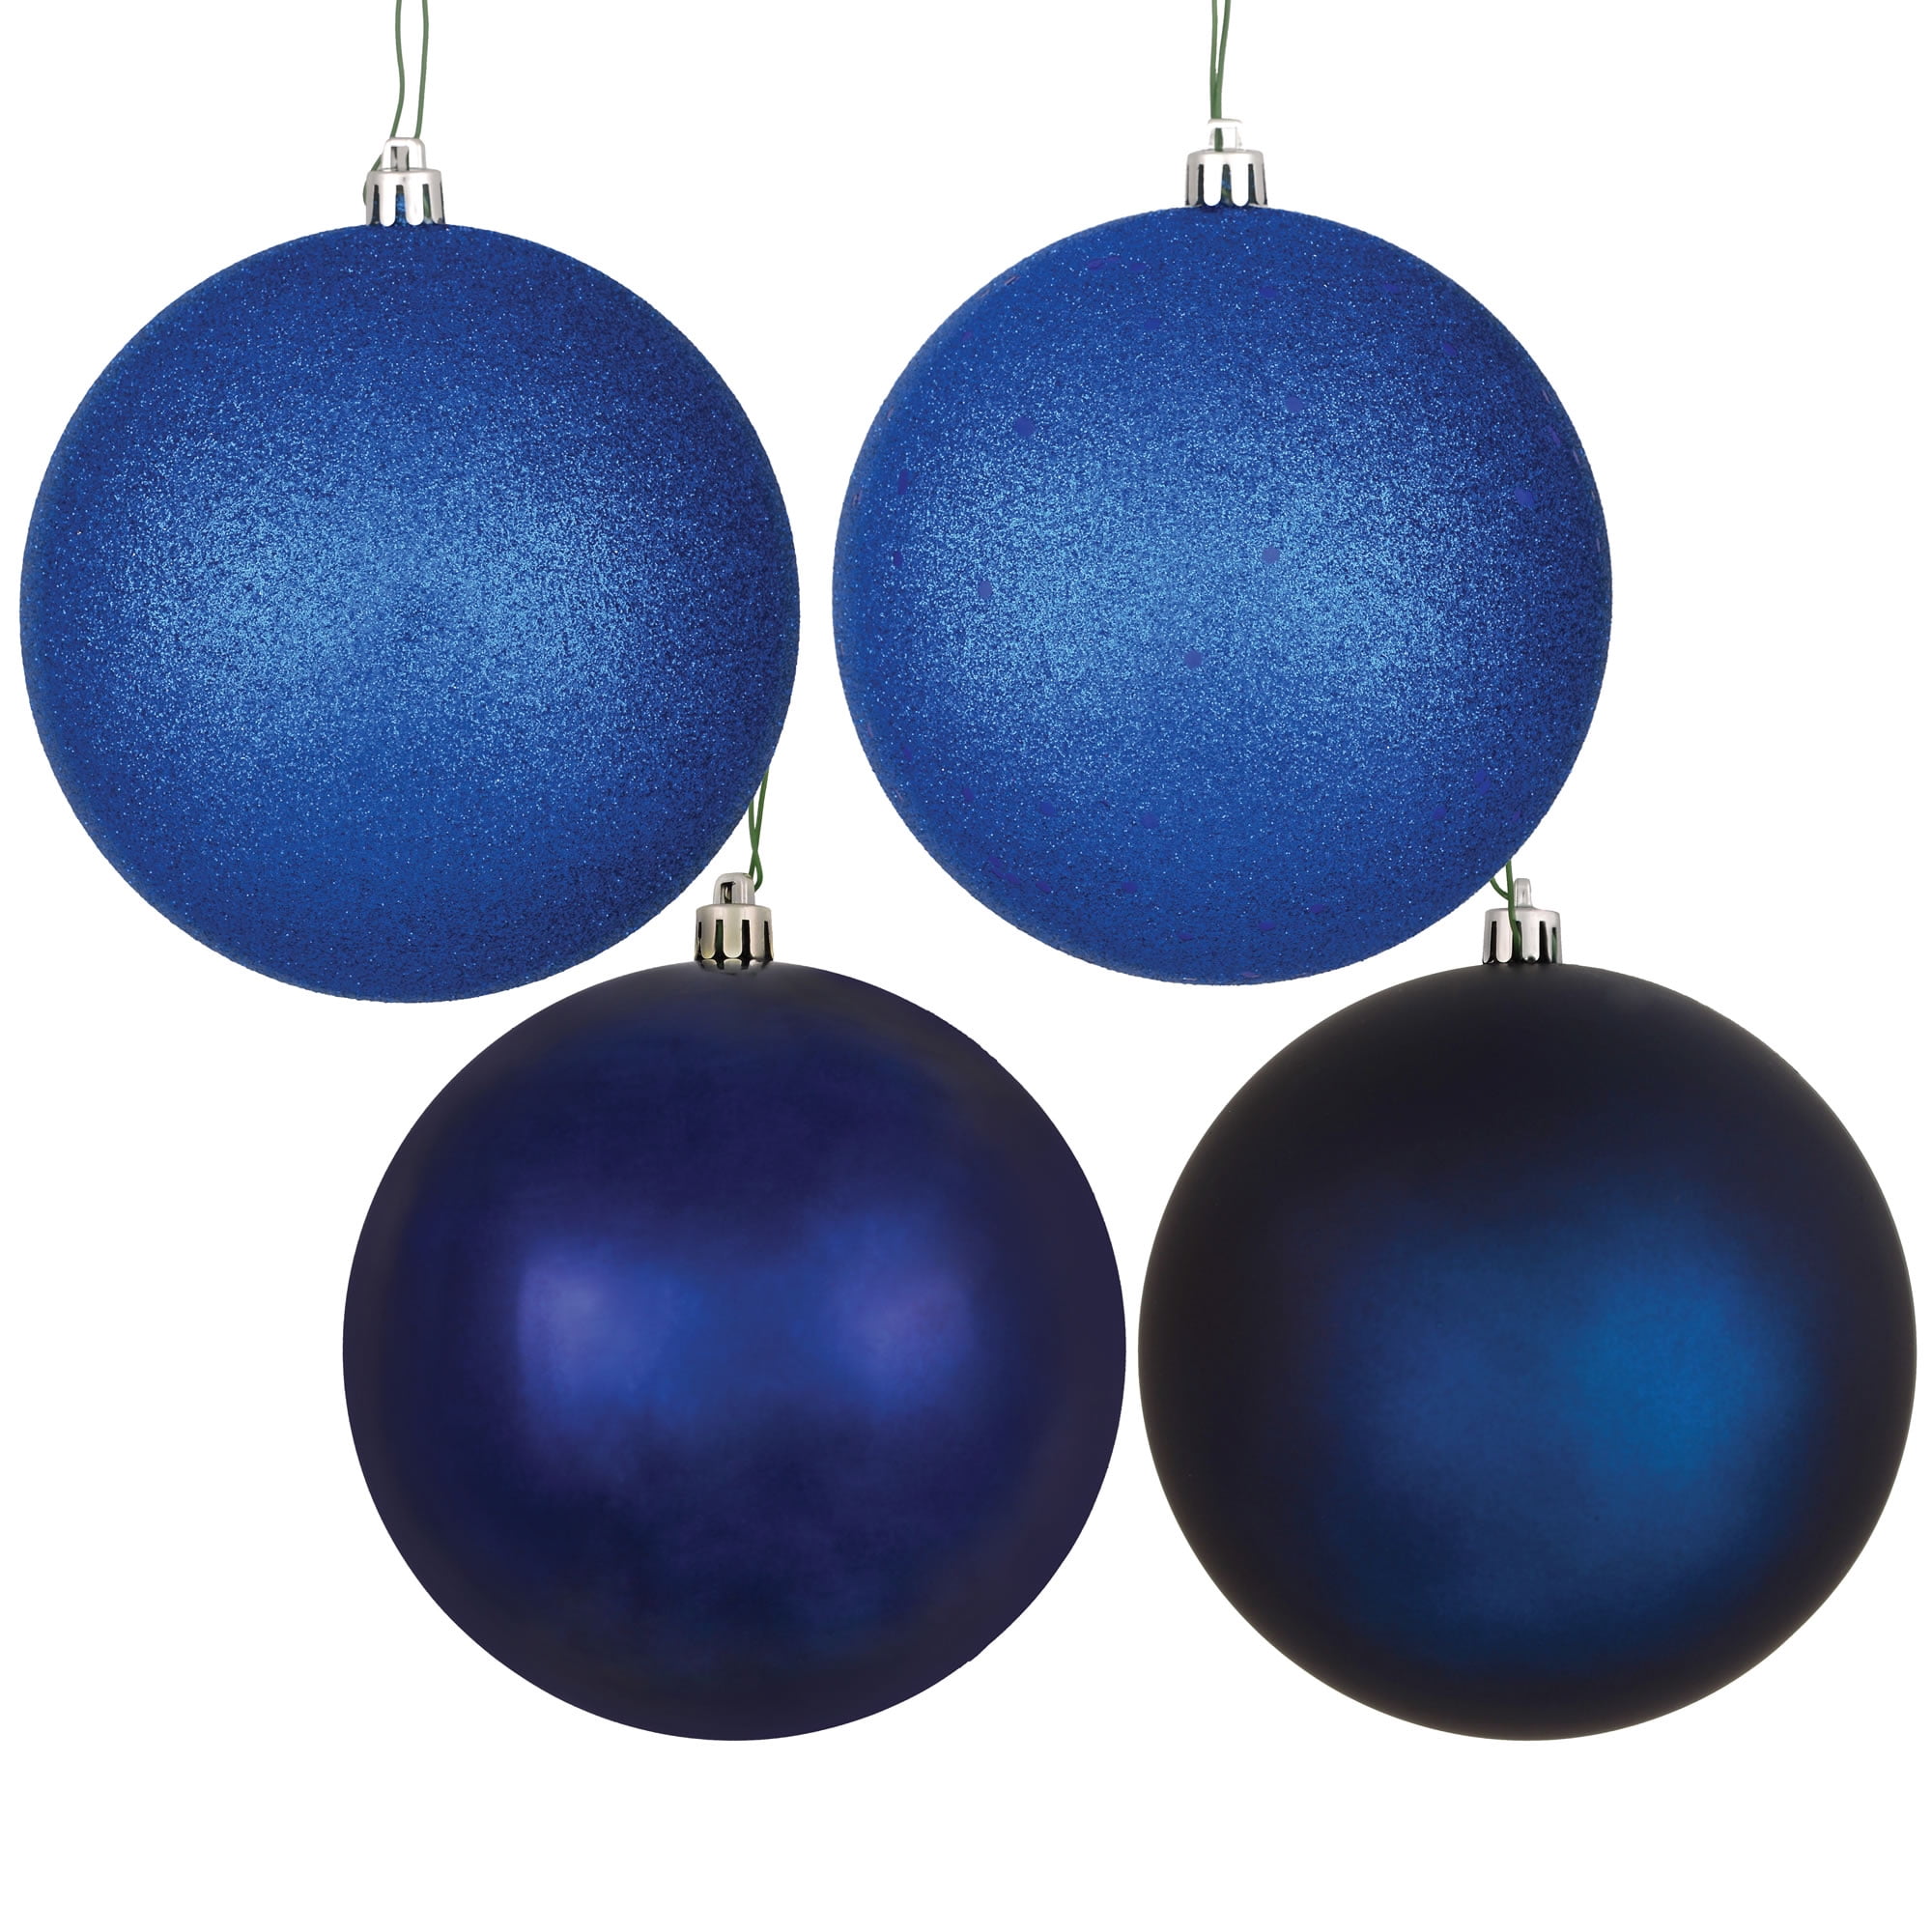 6 Purple Glitter Ball Ornament